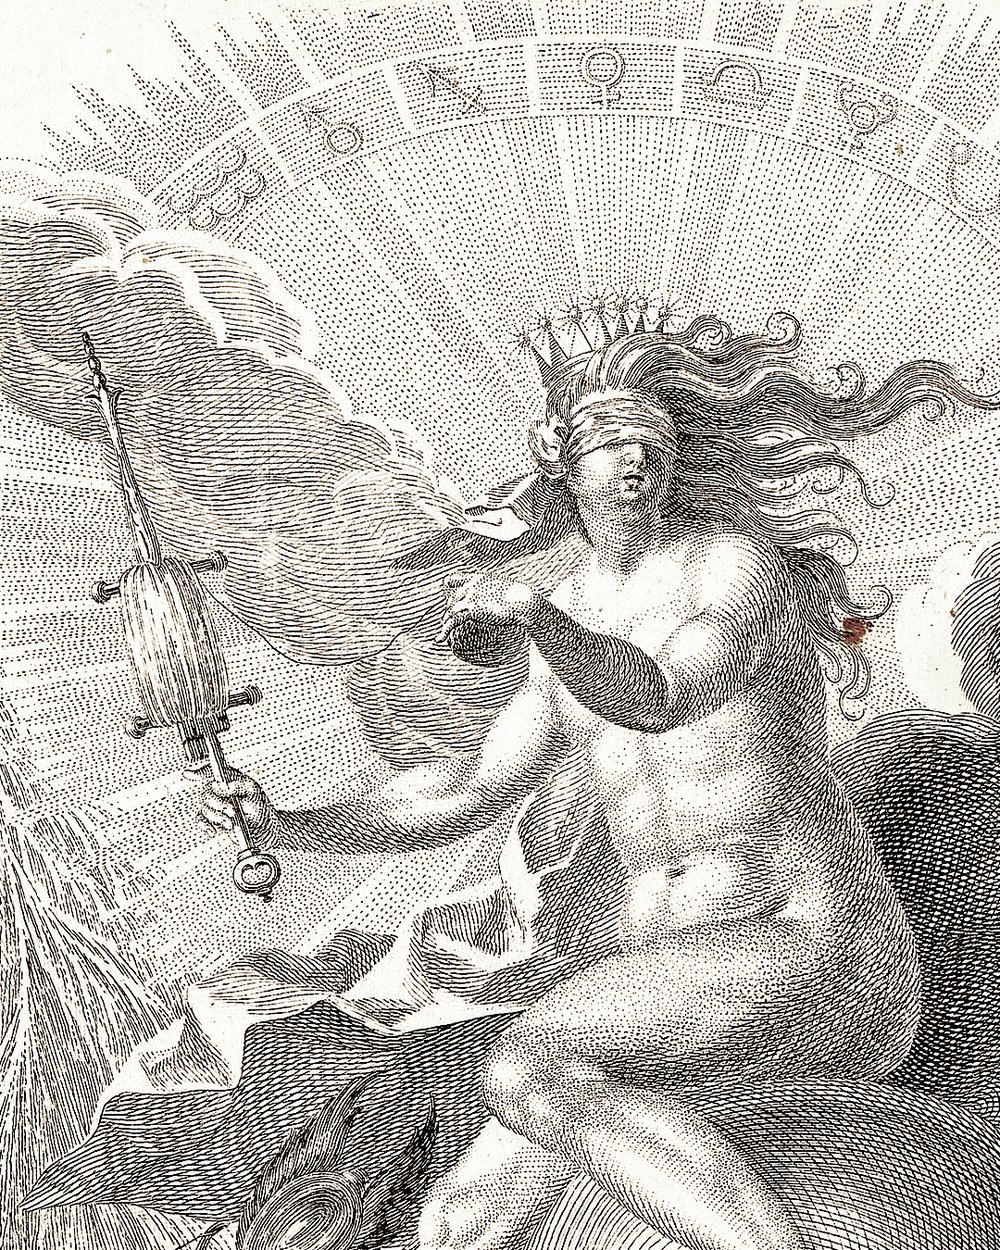 ''Allegory of false belief'' (1721 - 1771)